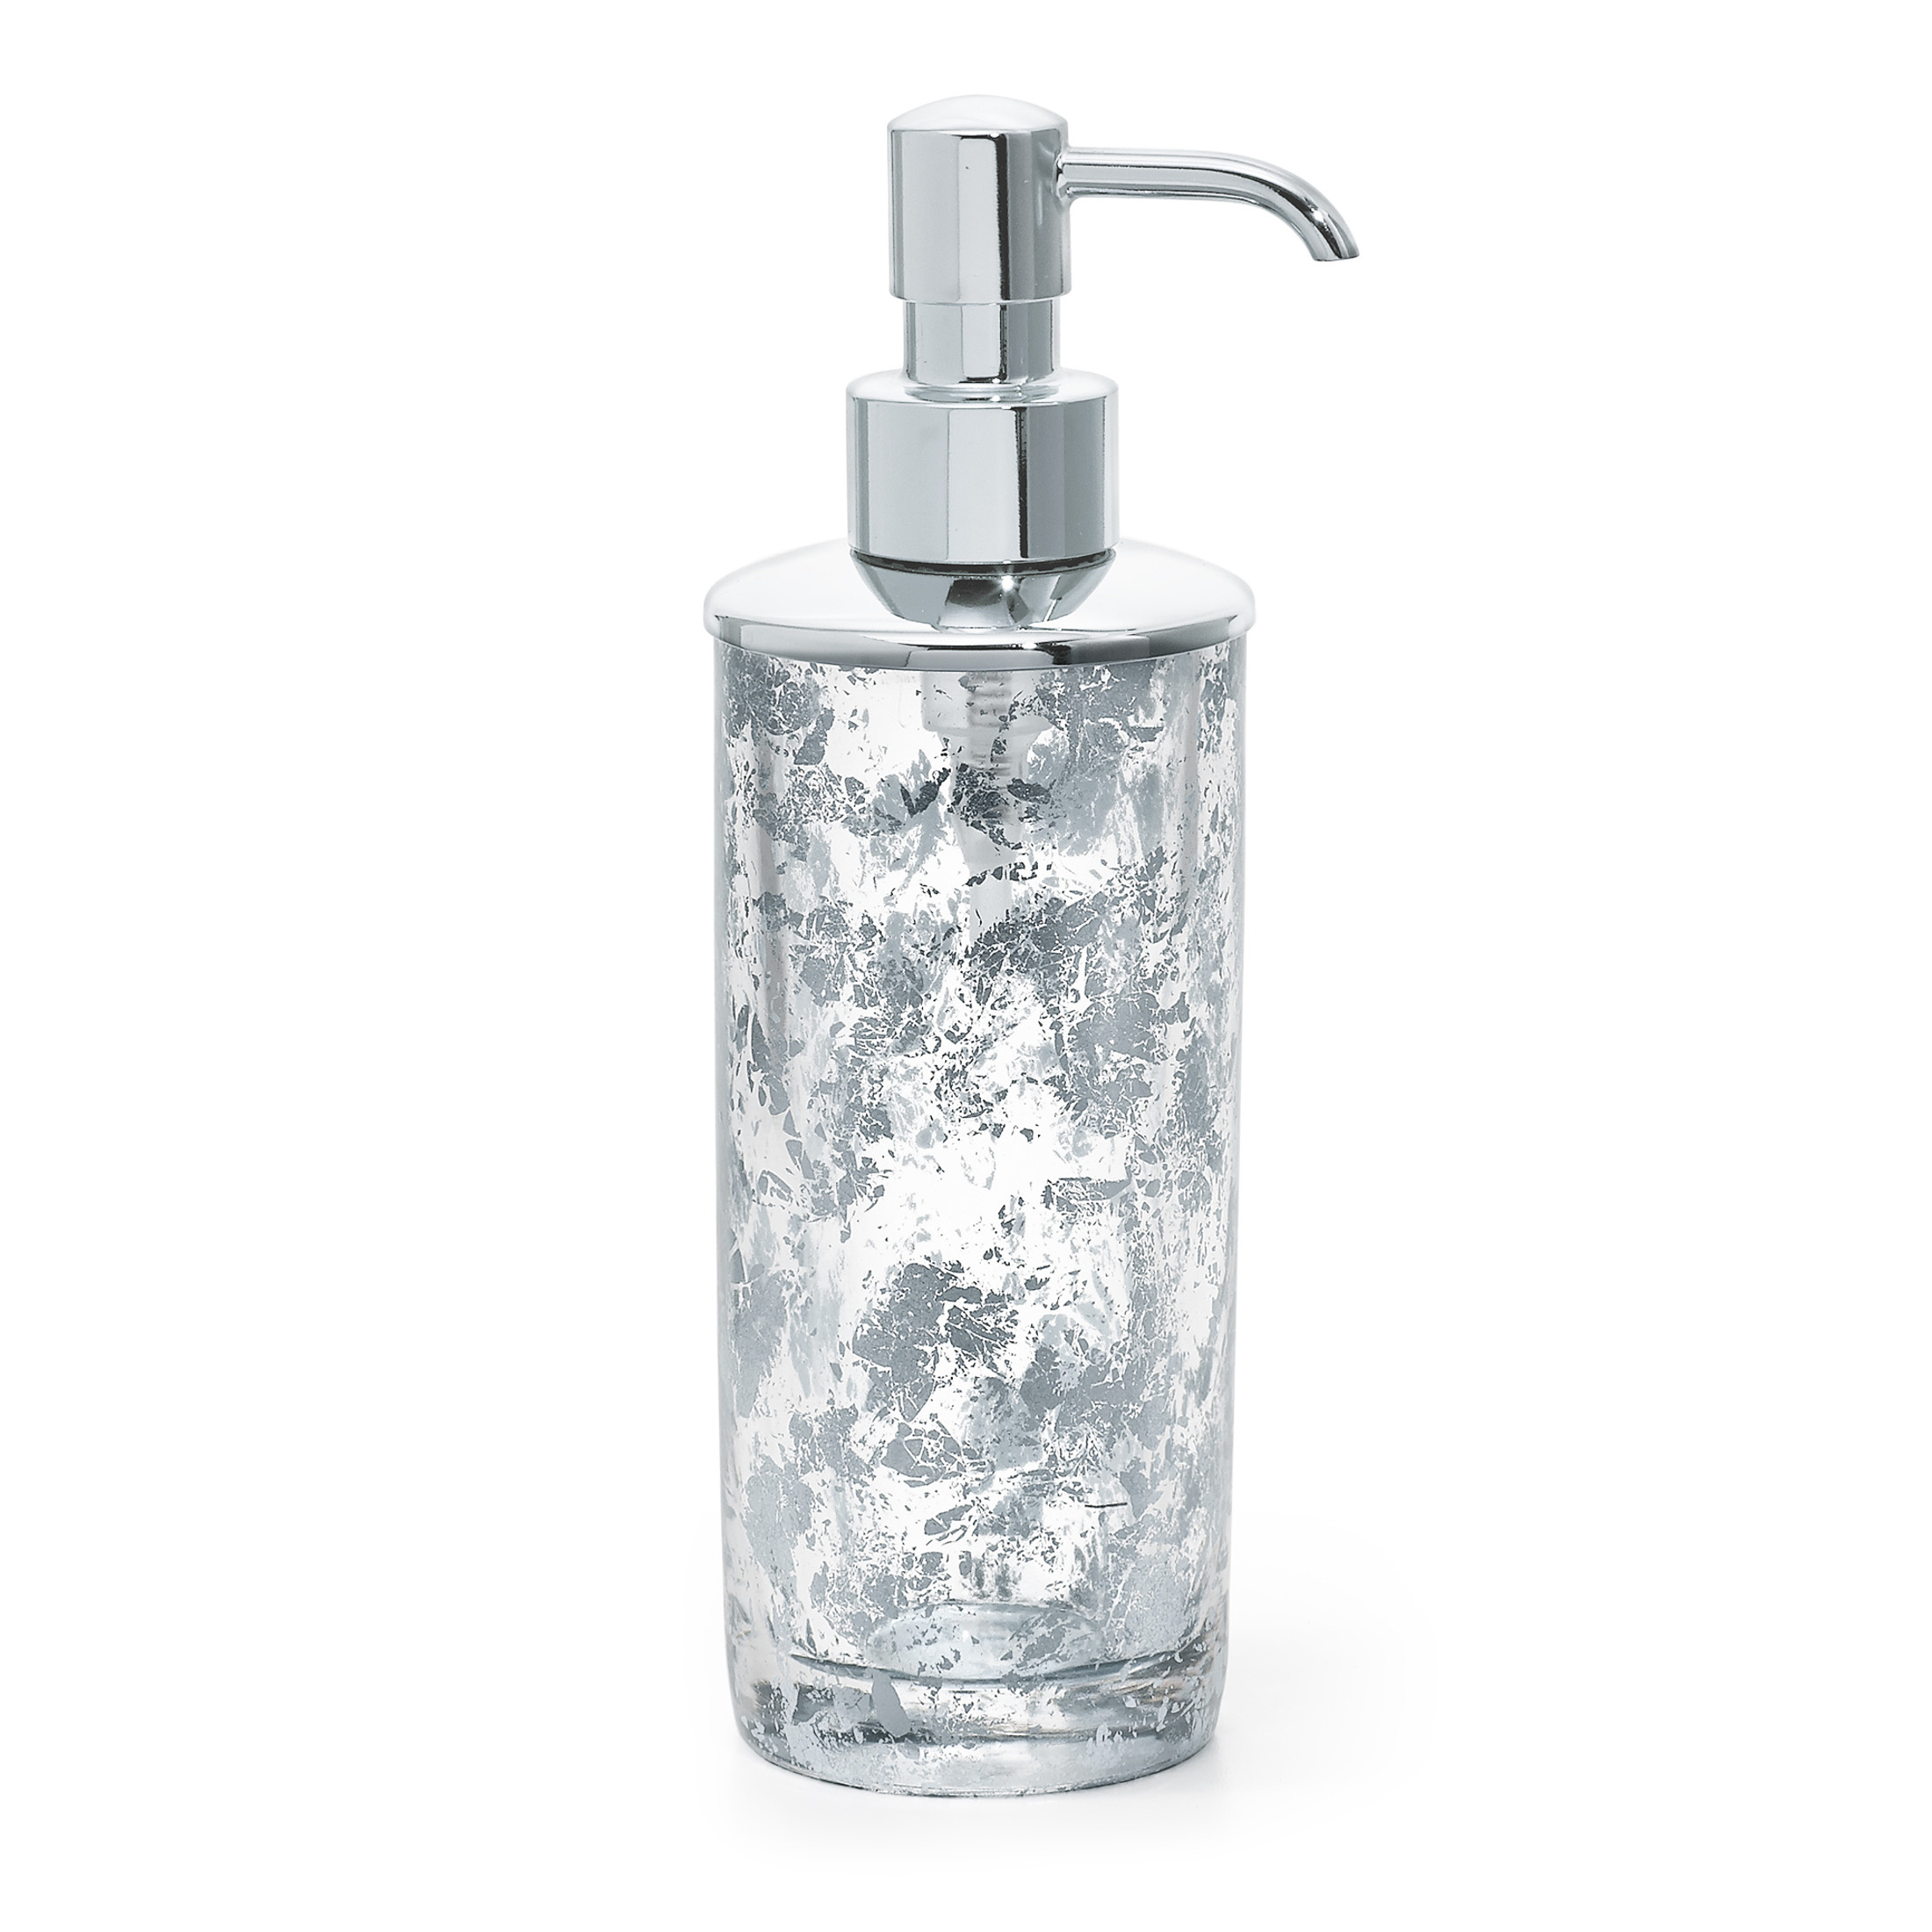 Rippled Glass Soap Dispensers - Silver Pump